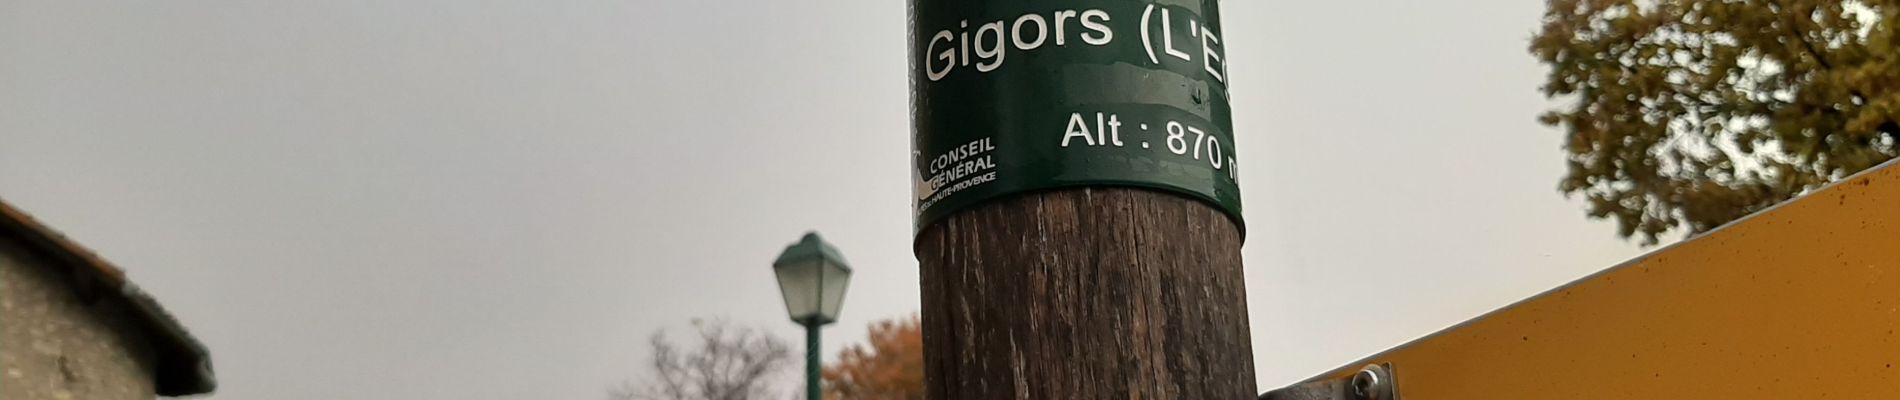 Randonnée Marche Gigors - GIGORS Champas Crête de la Colle o l - Photo